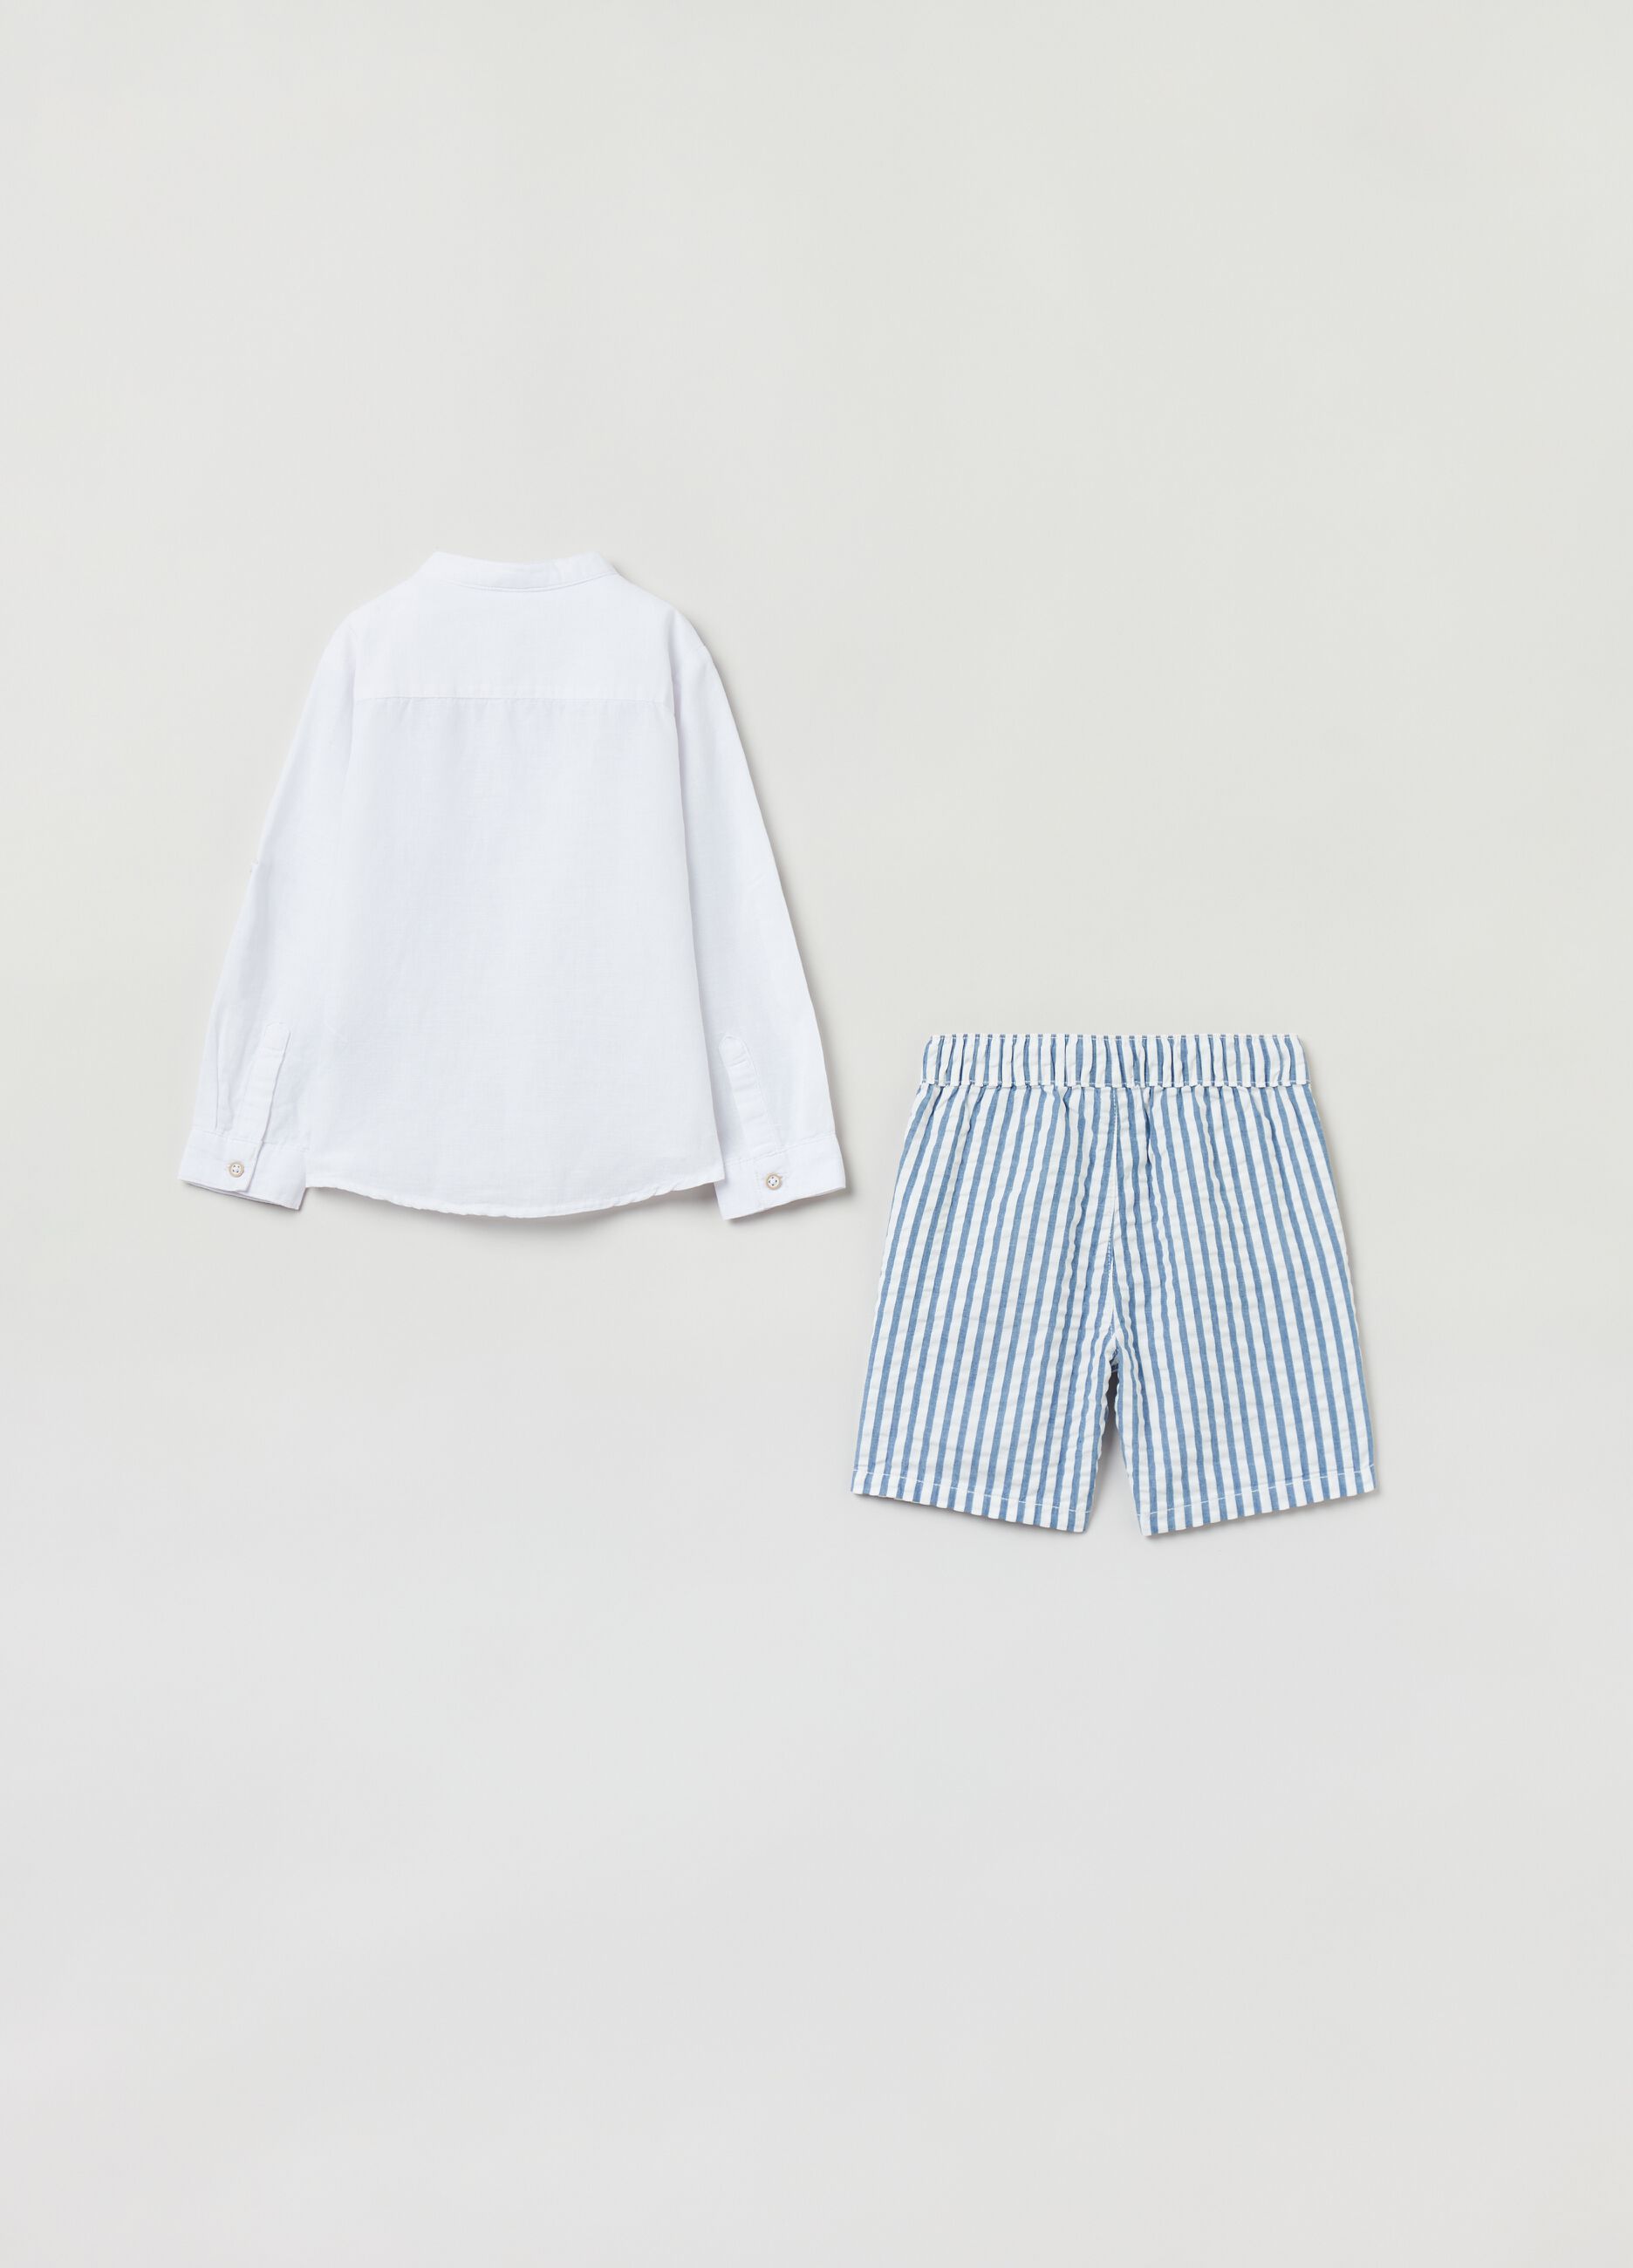 Striped shirt and shorts set